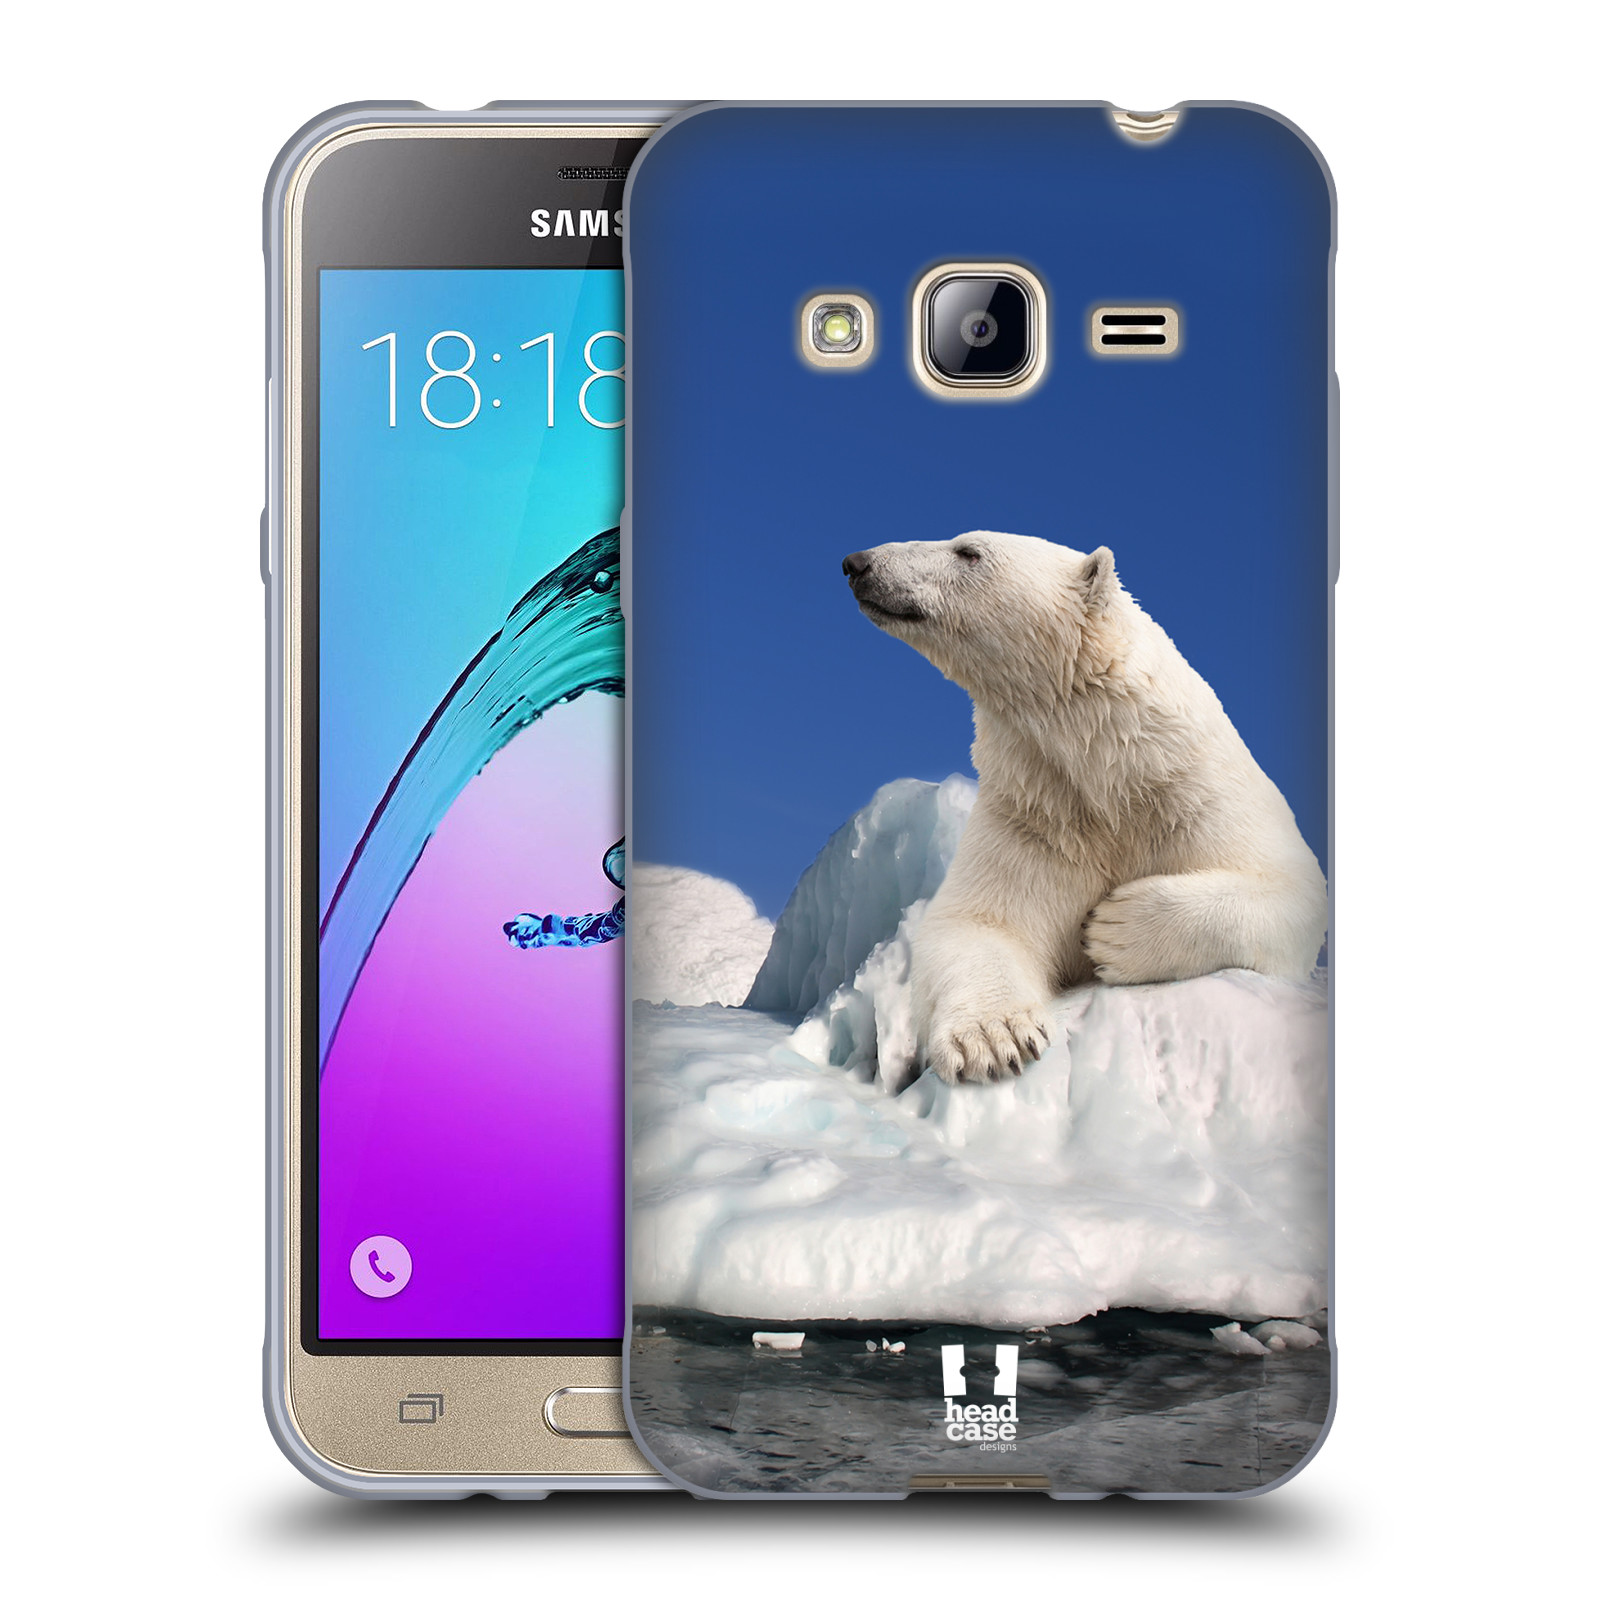 HEAD CASE silikonový obal na mobil Samsung Galaxy J3, J3 2016 vzor Divočina, Divoký život a zvířata foto LEDNÍ MEDVĚD NA LEDOVCI A NEBE MODRÁ